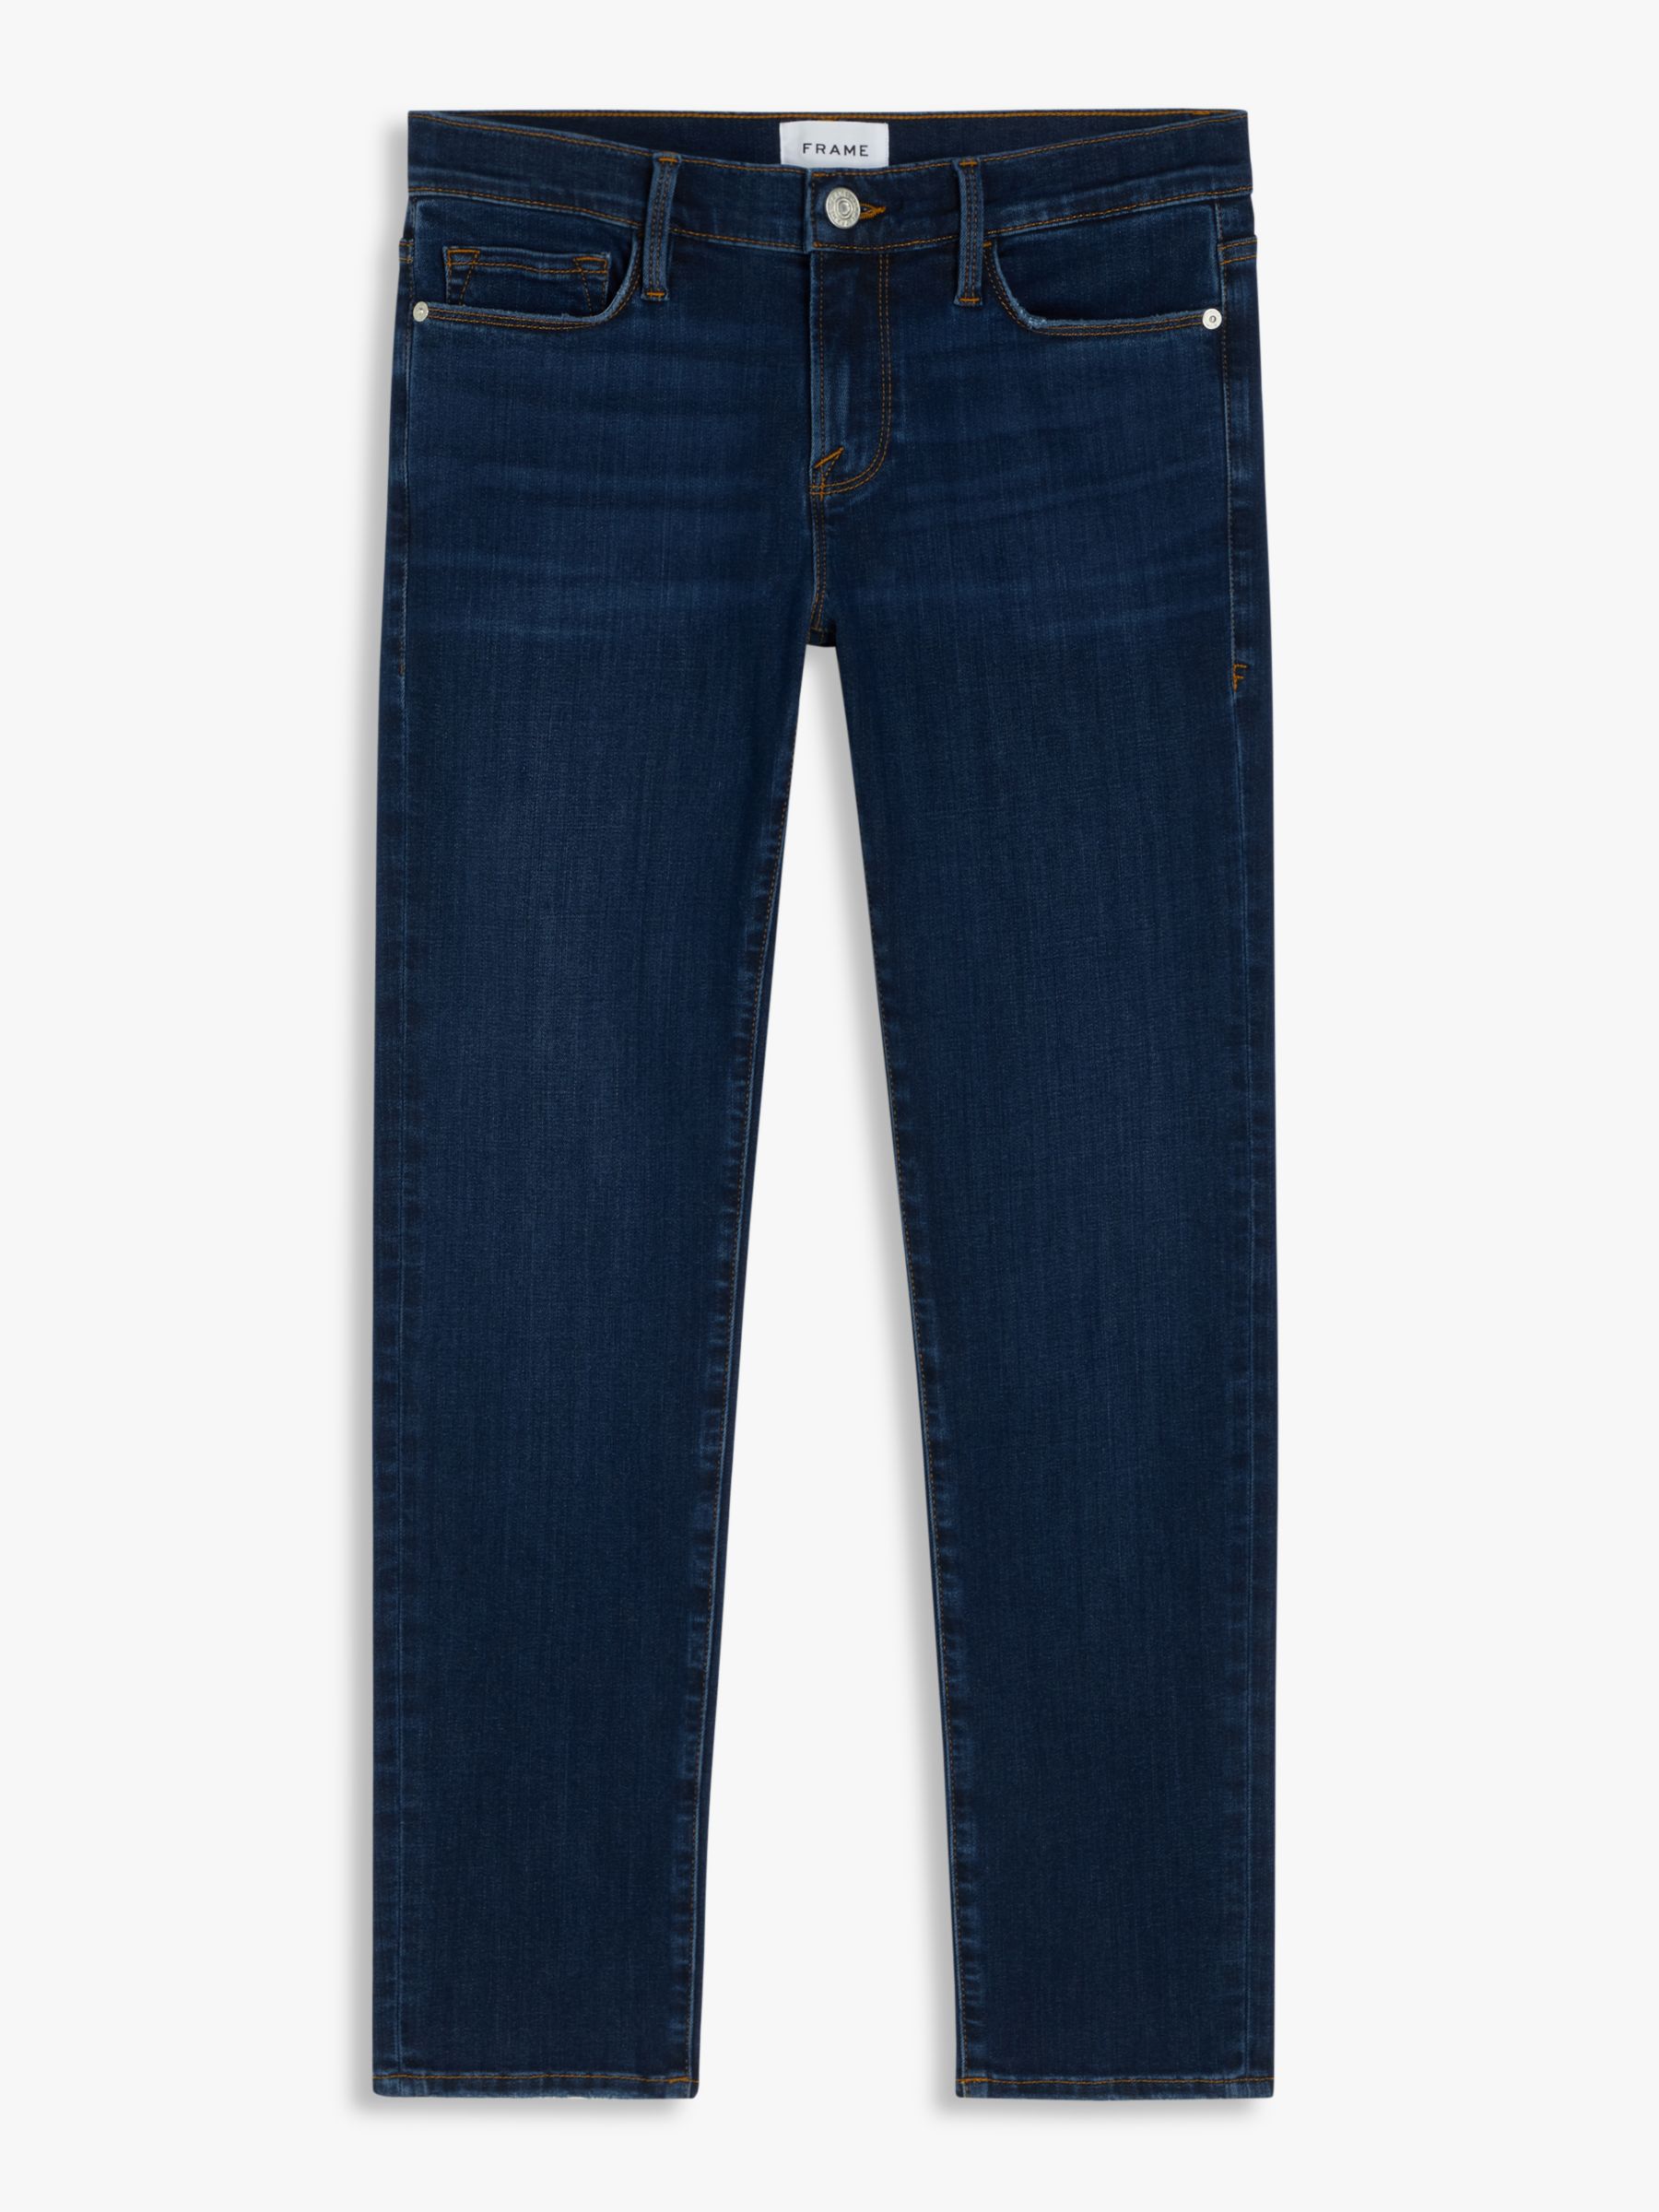 Buy FRAME Le Garcon Tapered Jeans, Majesty Online at johnlewis.com